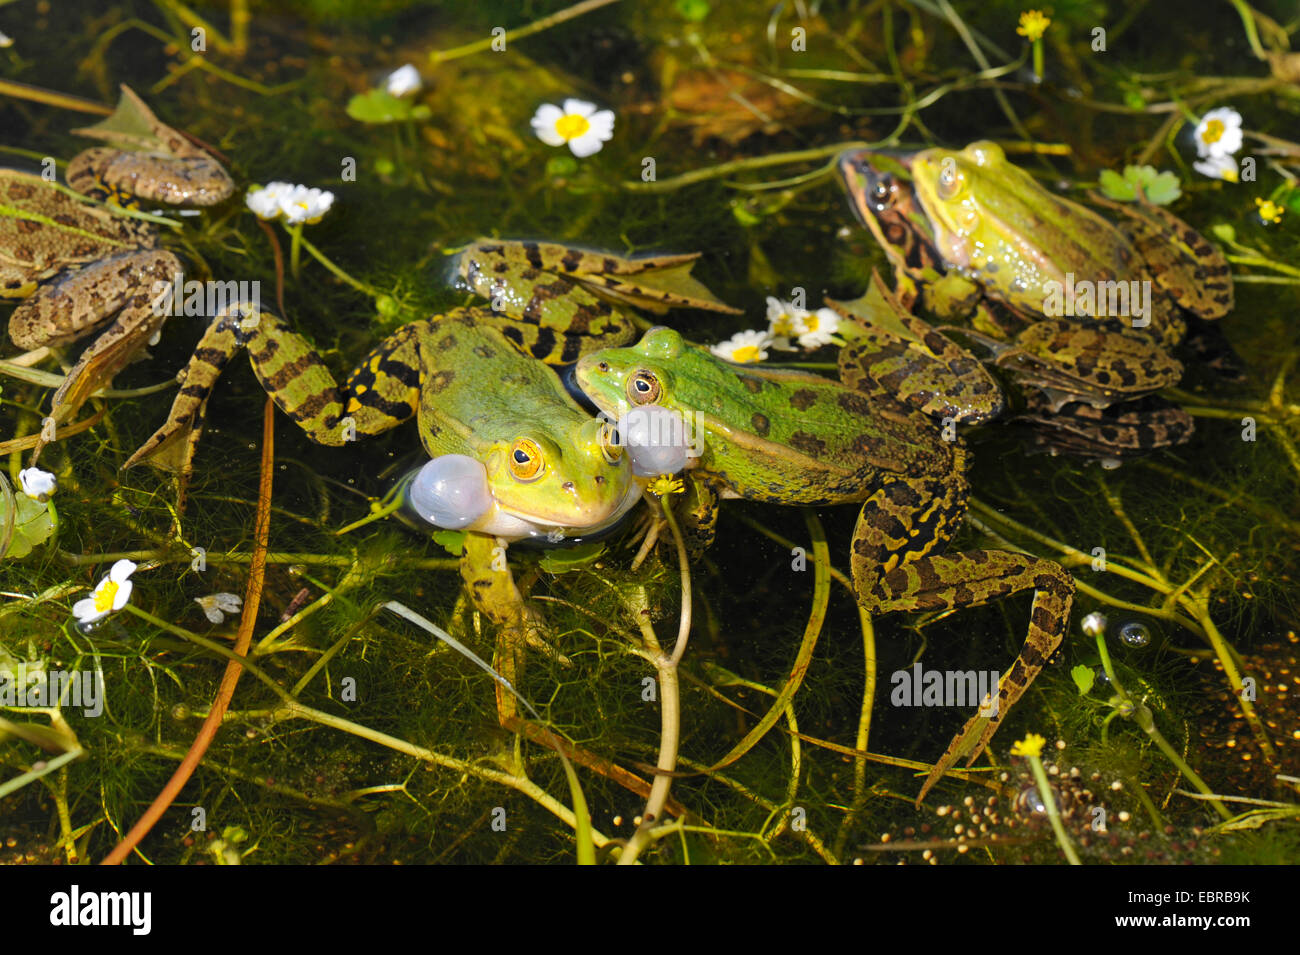 Pool frog, Little waterfrog (Rana lessonae, Pelophylax lessonae, Rana bergeri, Pelophylax bergeri, Pelophylax lessonae bergeri), mating pool frogs, France, Corsica Stock Photo